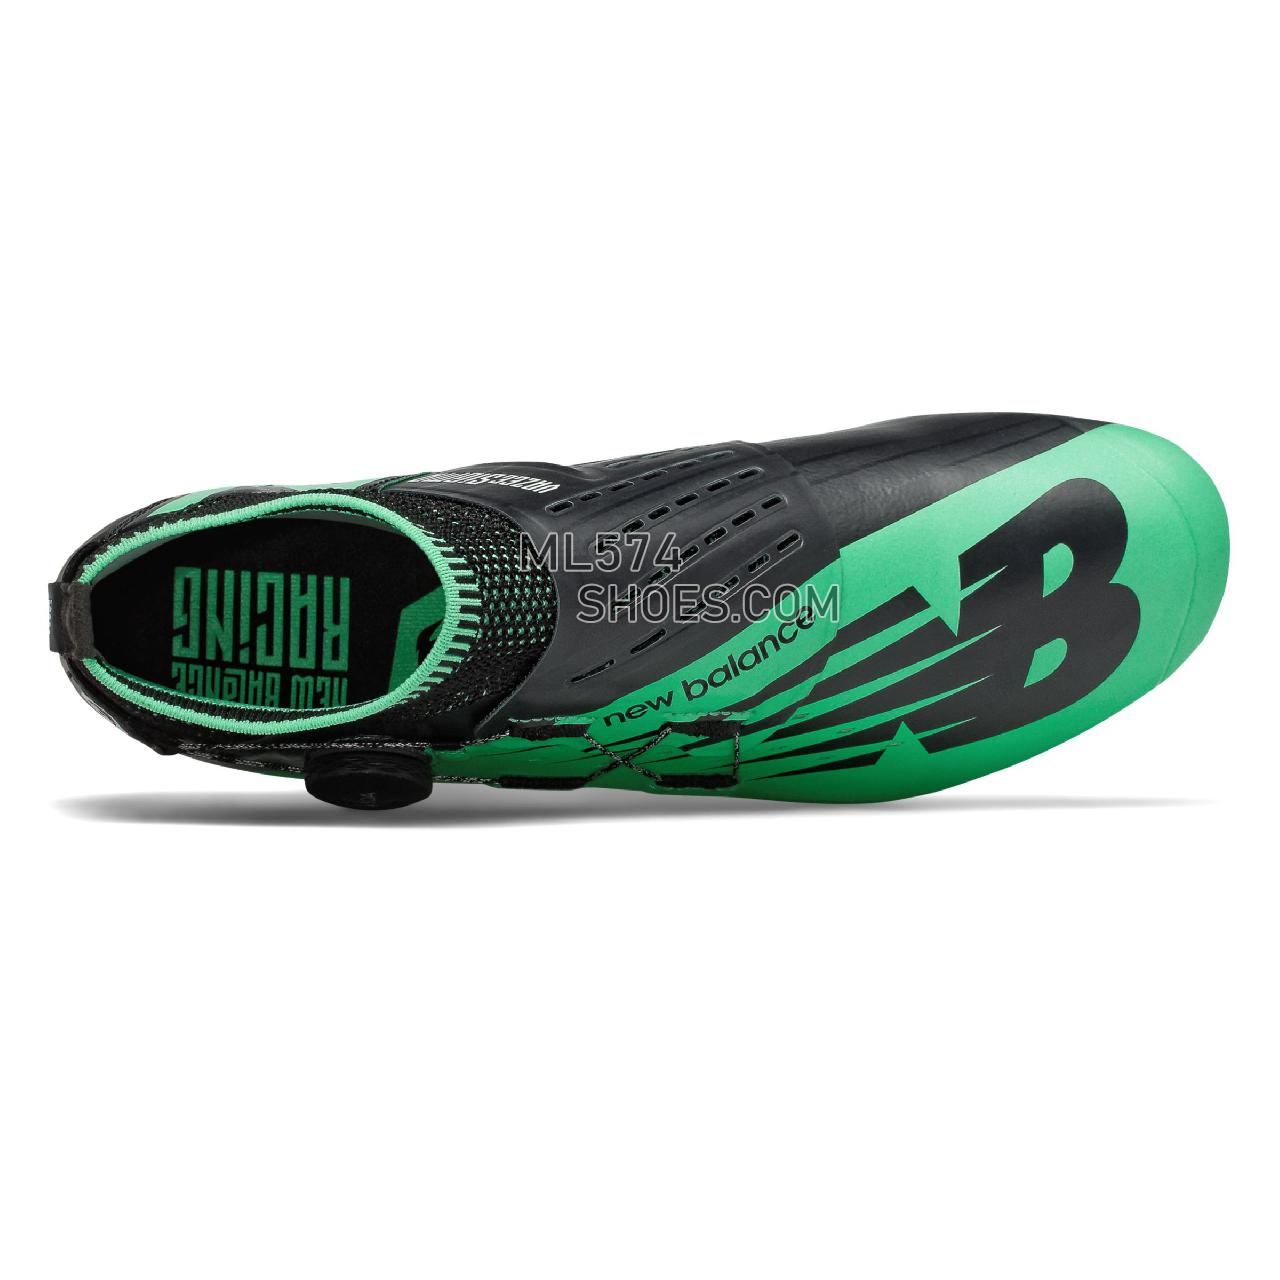 New Balance Vazee Sigma - Men's Vazee Sigma Running - Neon Emerald with Black - USDSGMGB